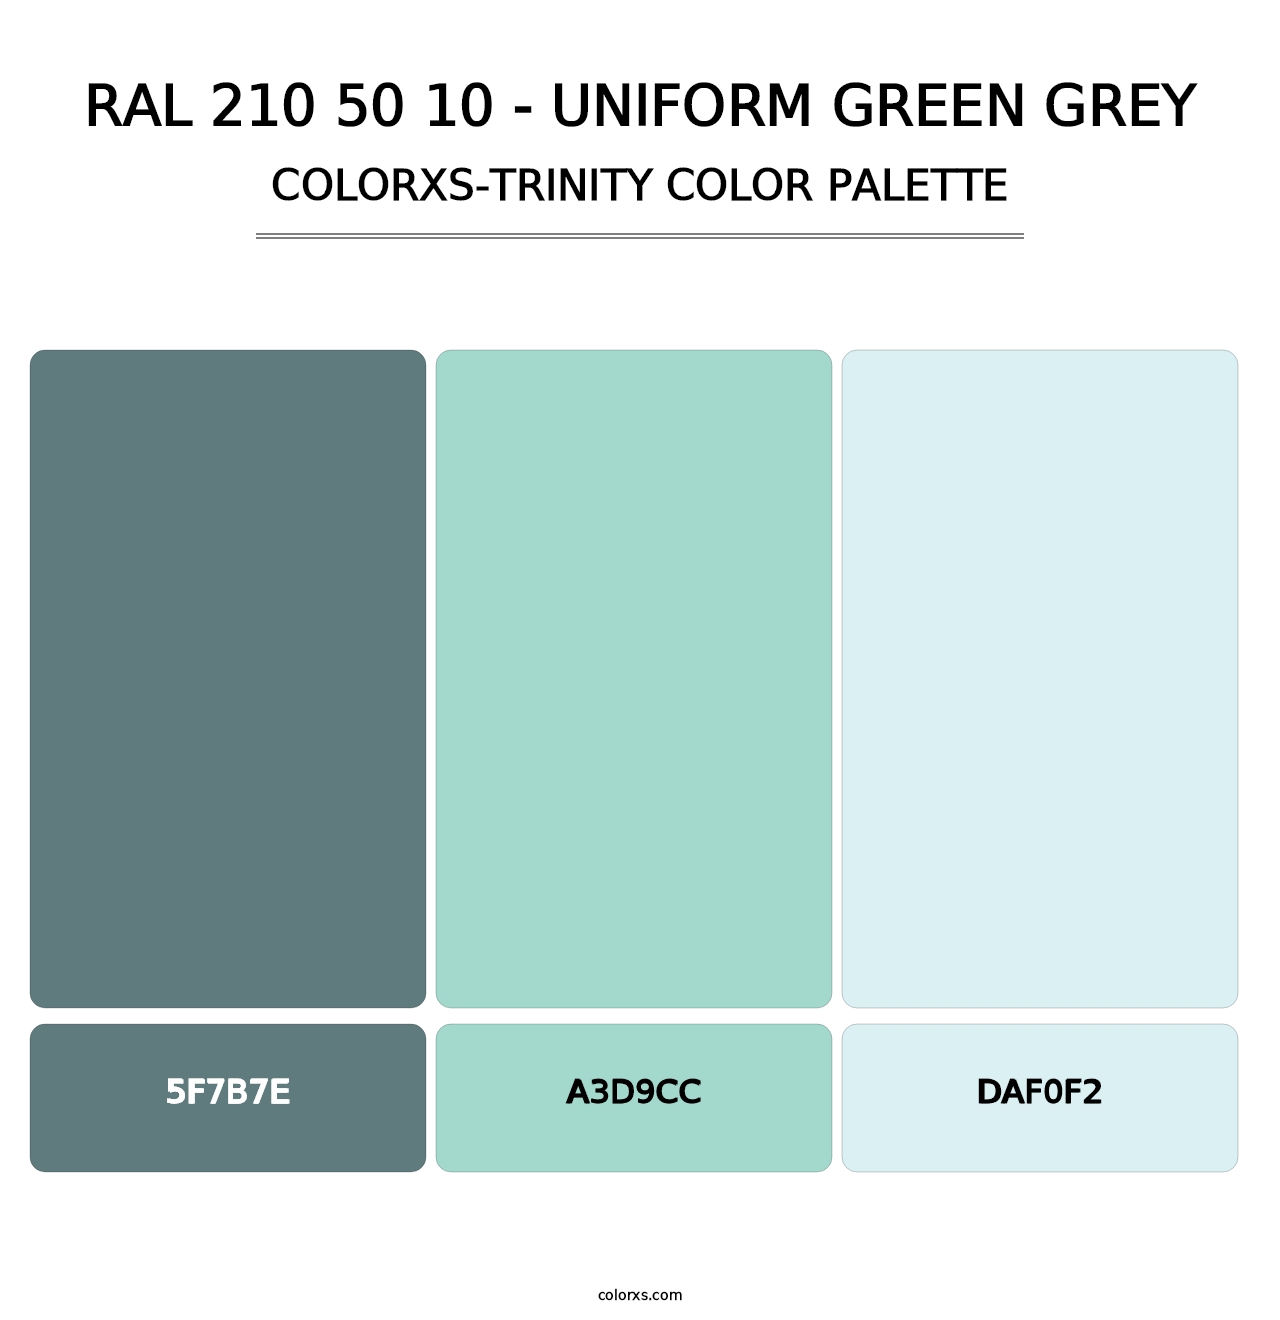 RAL 210 50 10 - Uniform Green Grey - Colorxs Trinity Palette